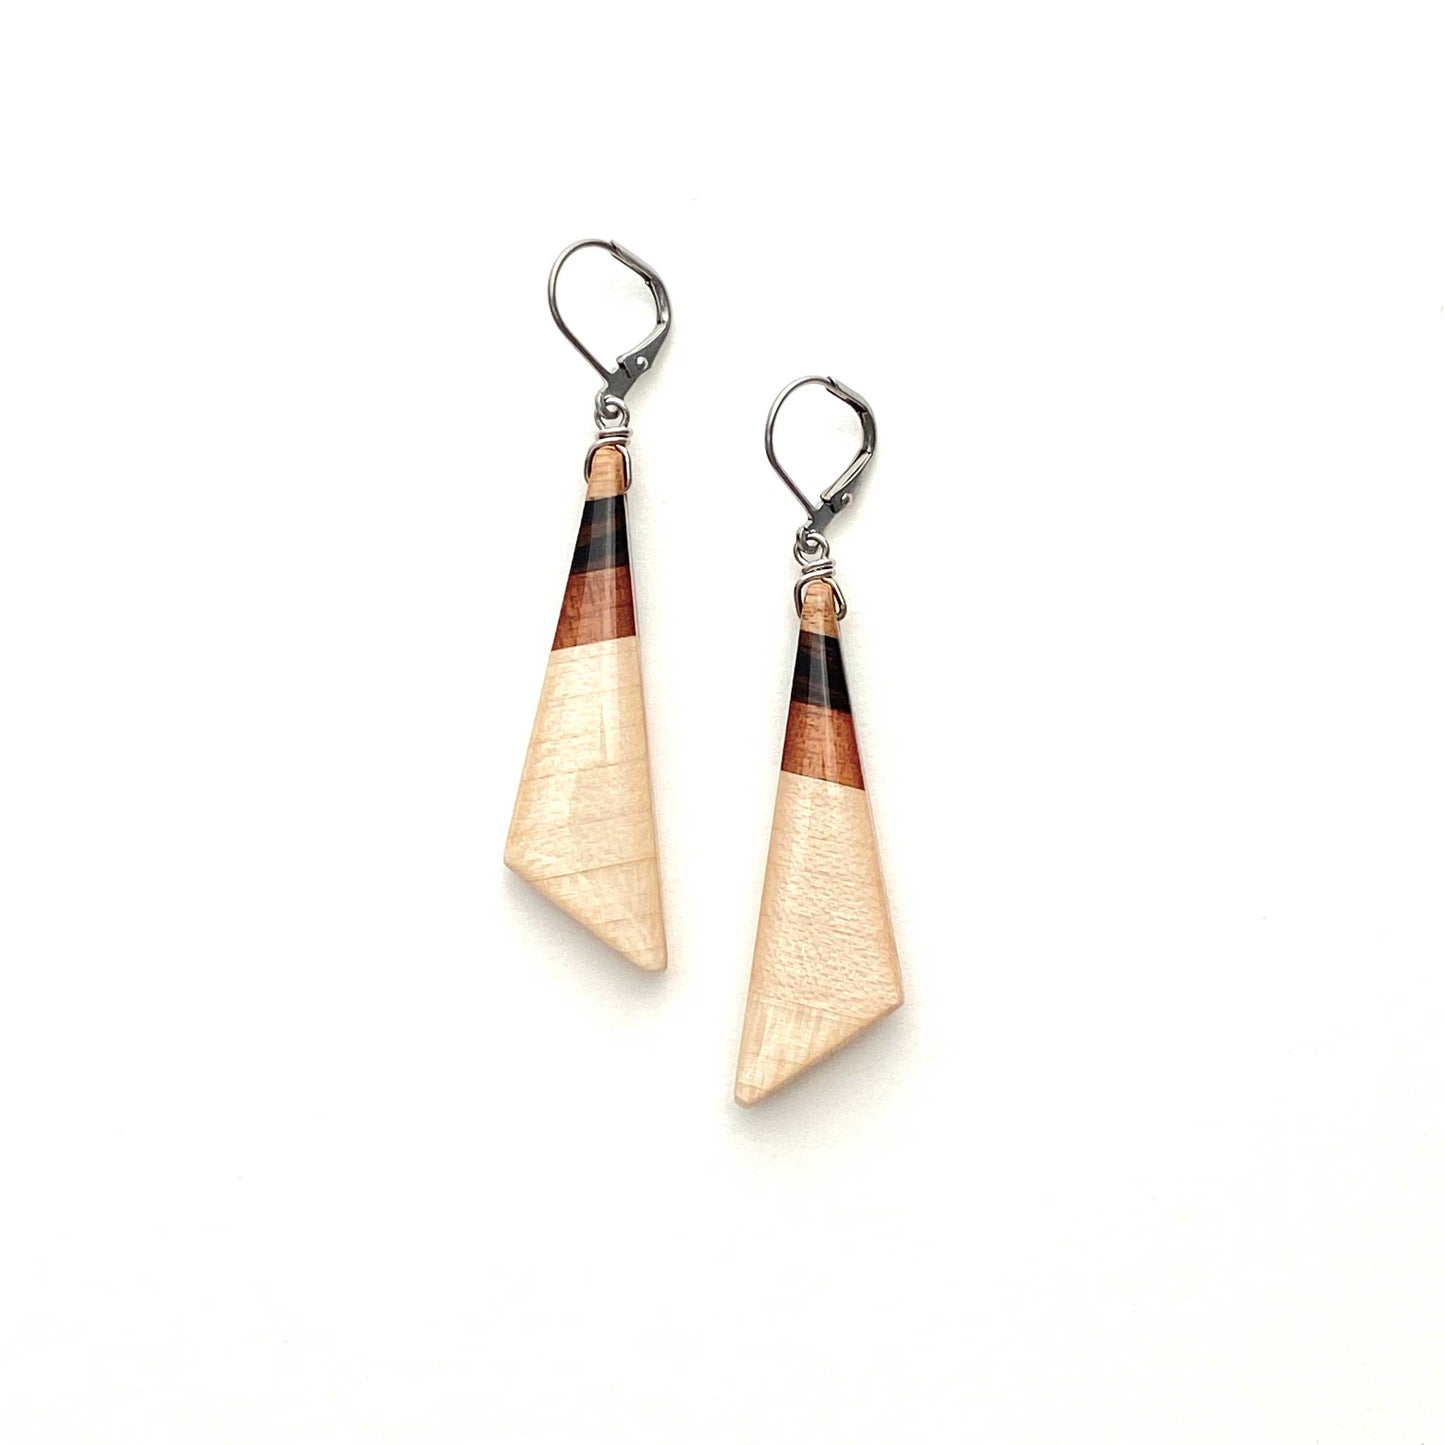 Obtuse Triangle Reclaimed Wood Earrings